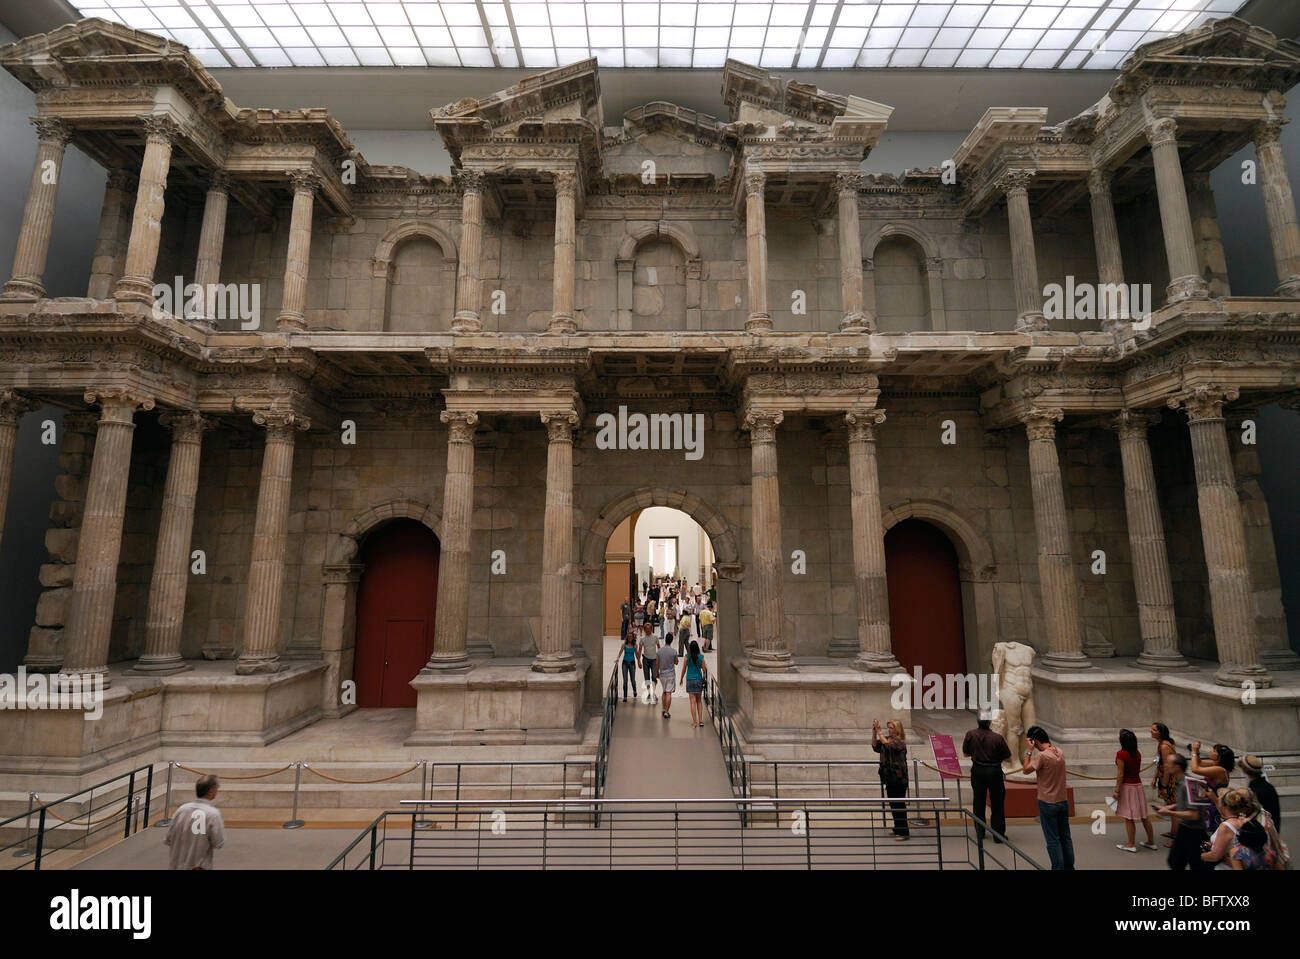 Berlin. Germany. Reconstruction of the Gate of Miletus Pergamon Museum. Stock Photo